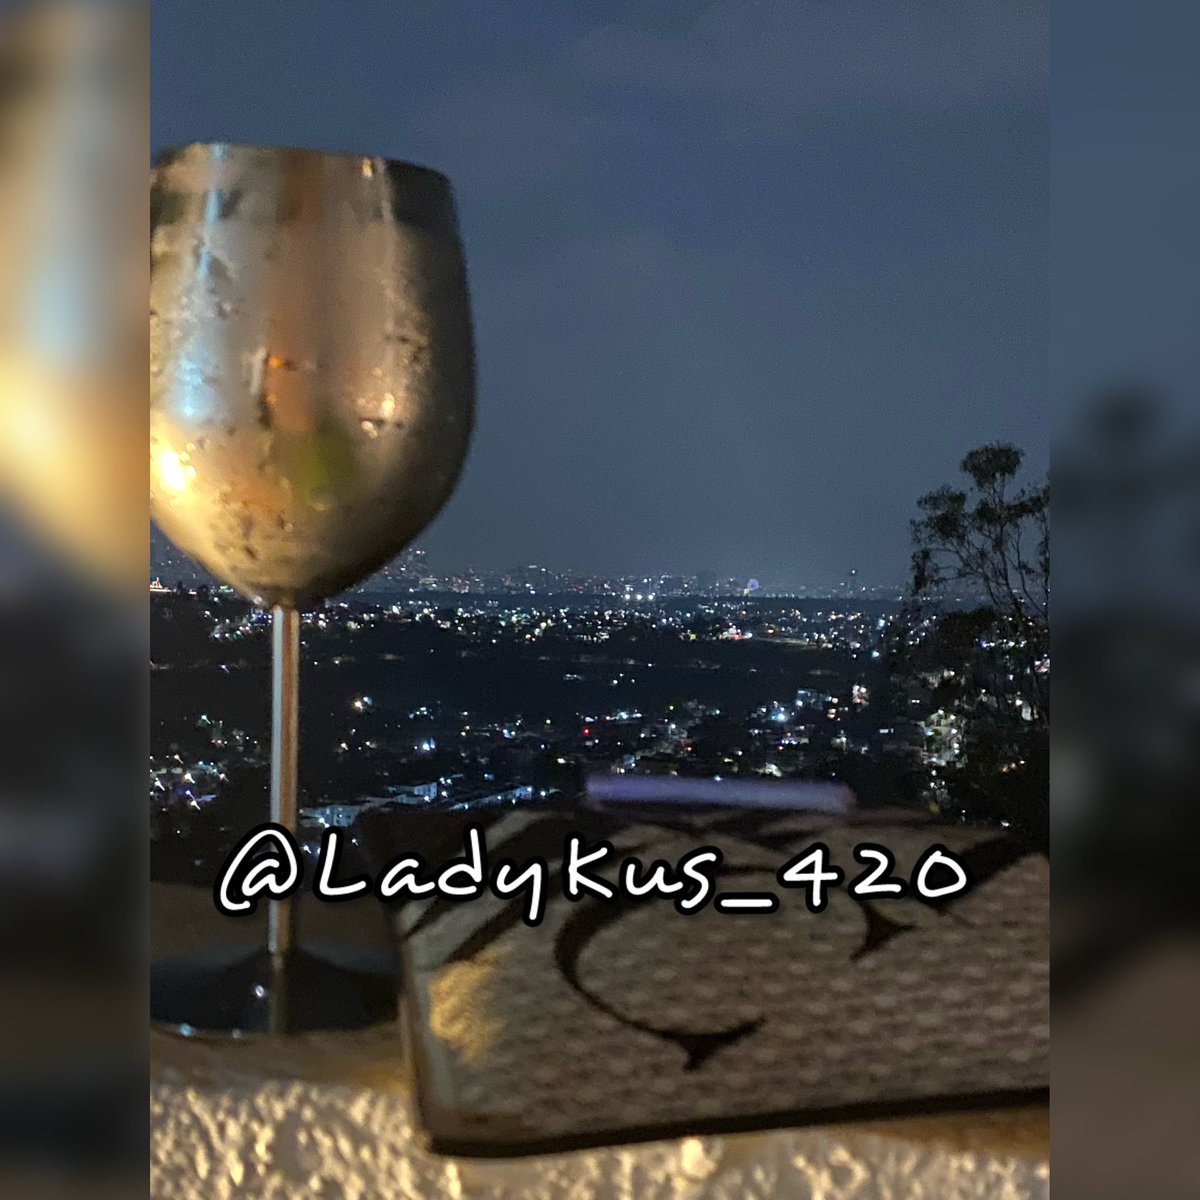 Noches con LadyKsuh 🌺
🔁RT SI YA TIENES RU PASE 
#Miercoles 
#420Fest